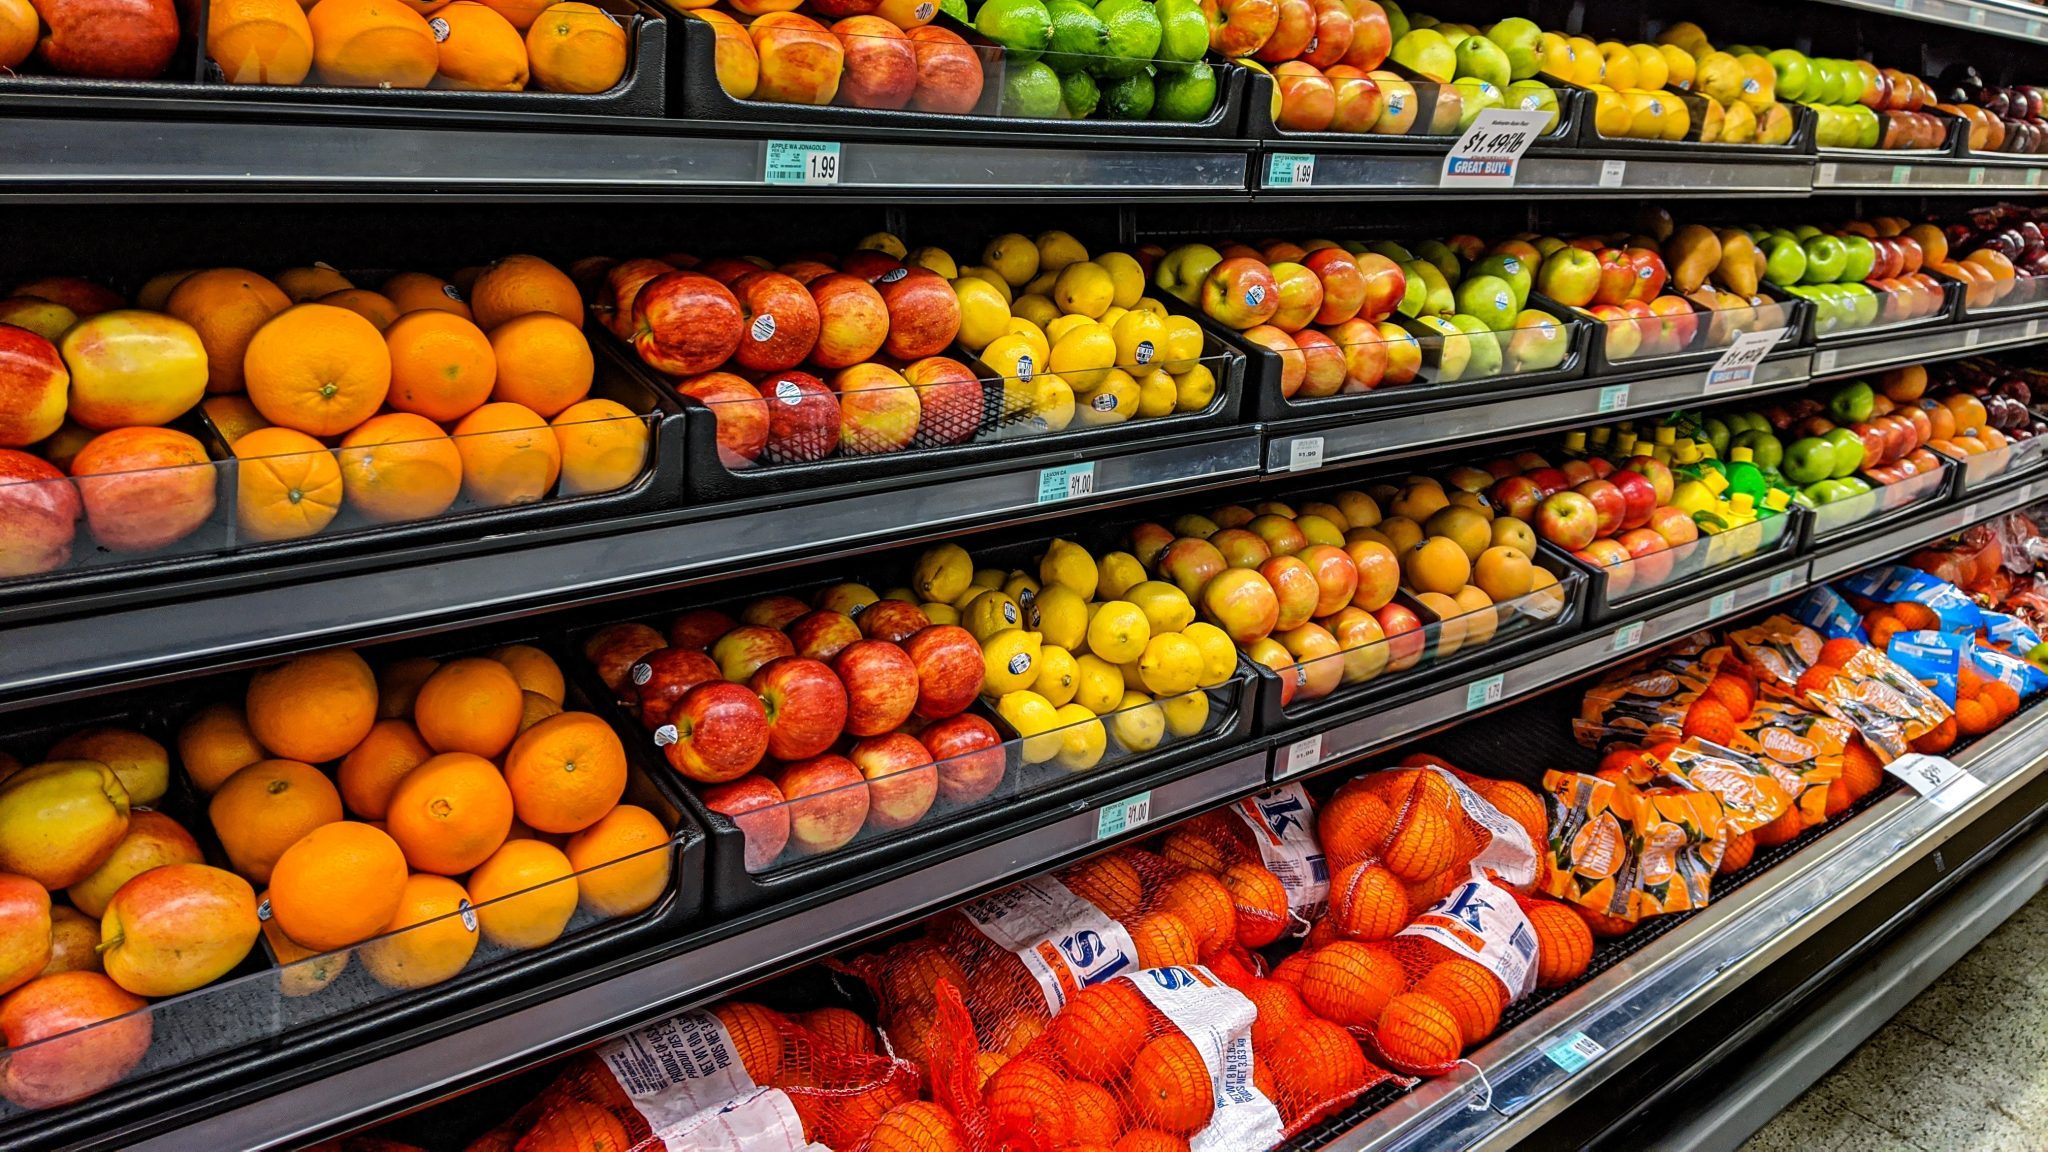 Fruit display in supermarket grocery store